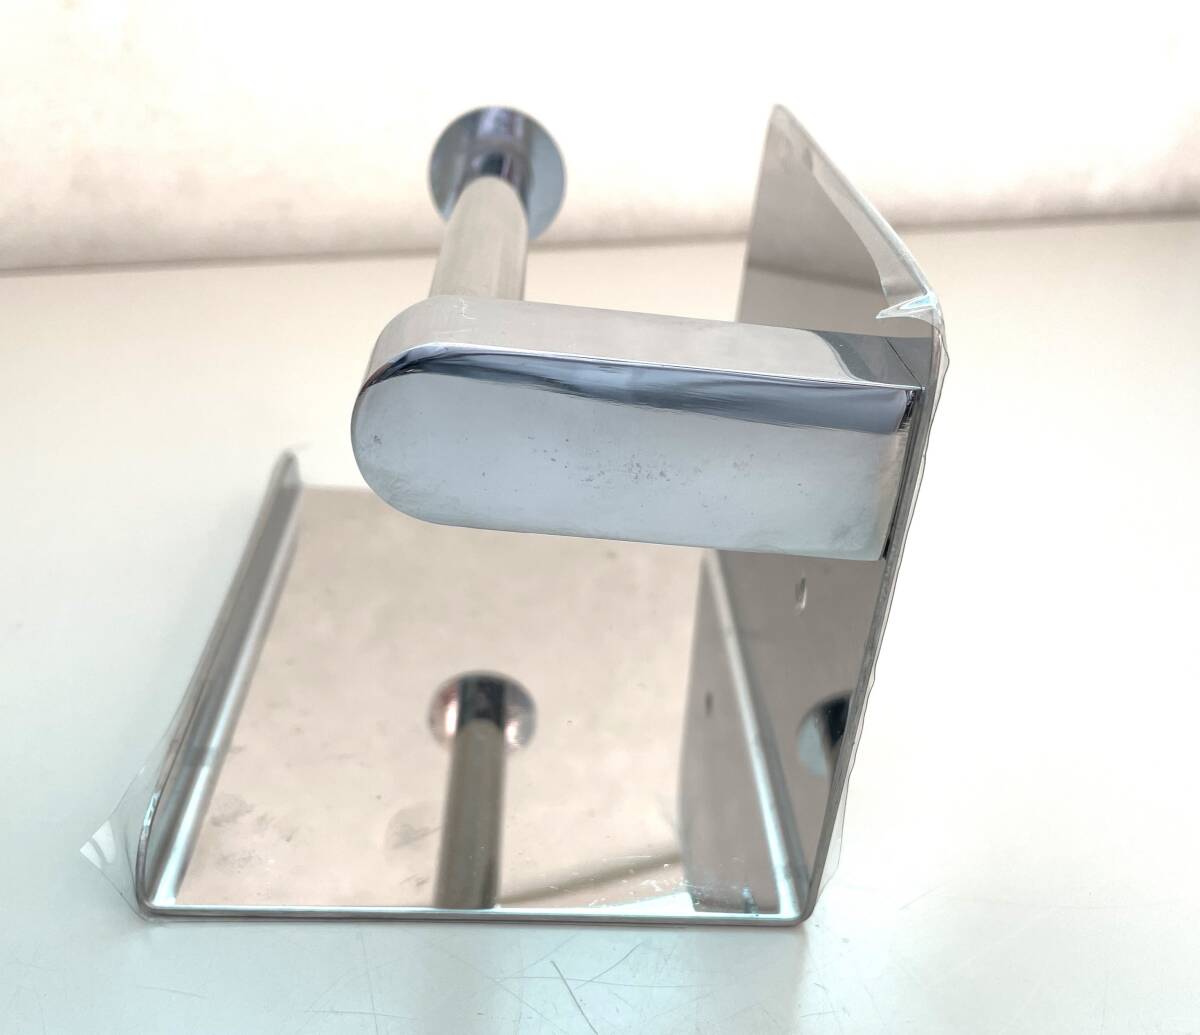 # stainless steel SUS304# toilet to paper holder #2 piece set # unused goods #